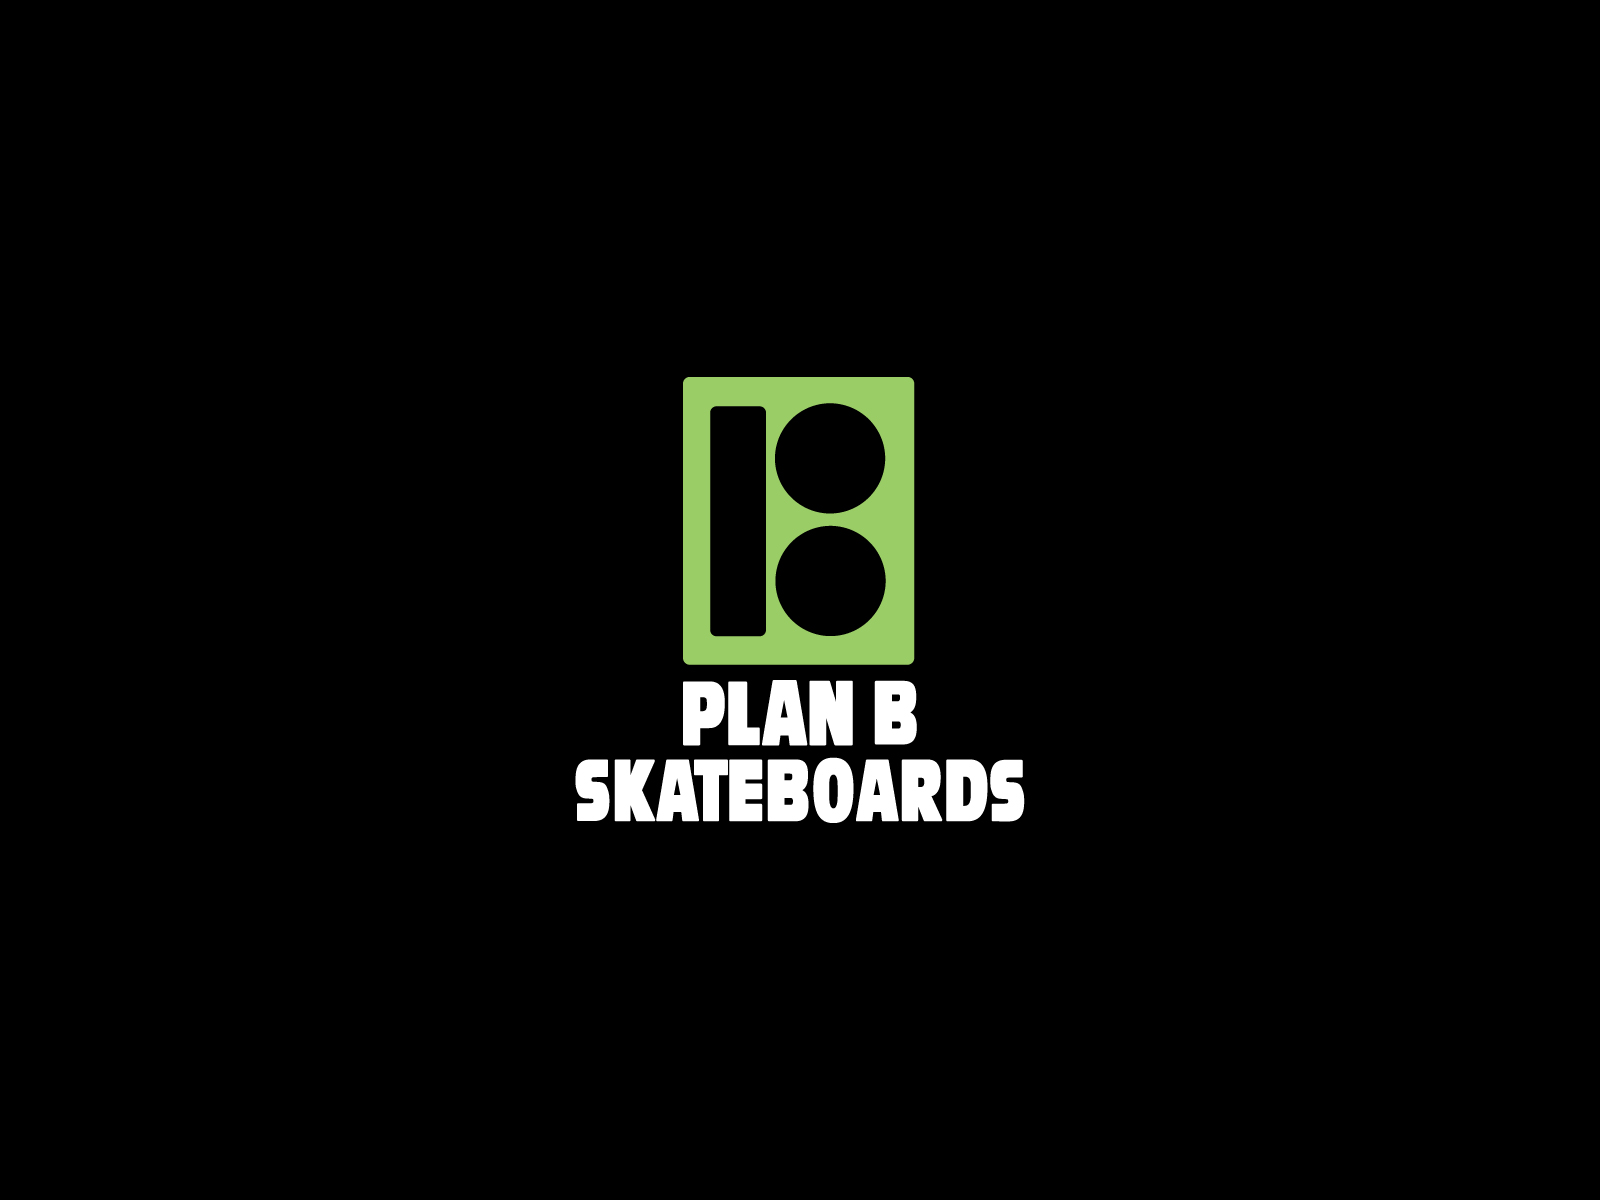 Skateboarding logos Skateboarding wallpapers skateboard wallpapers